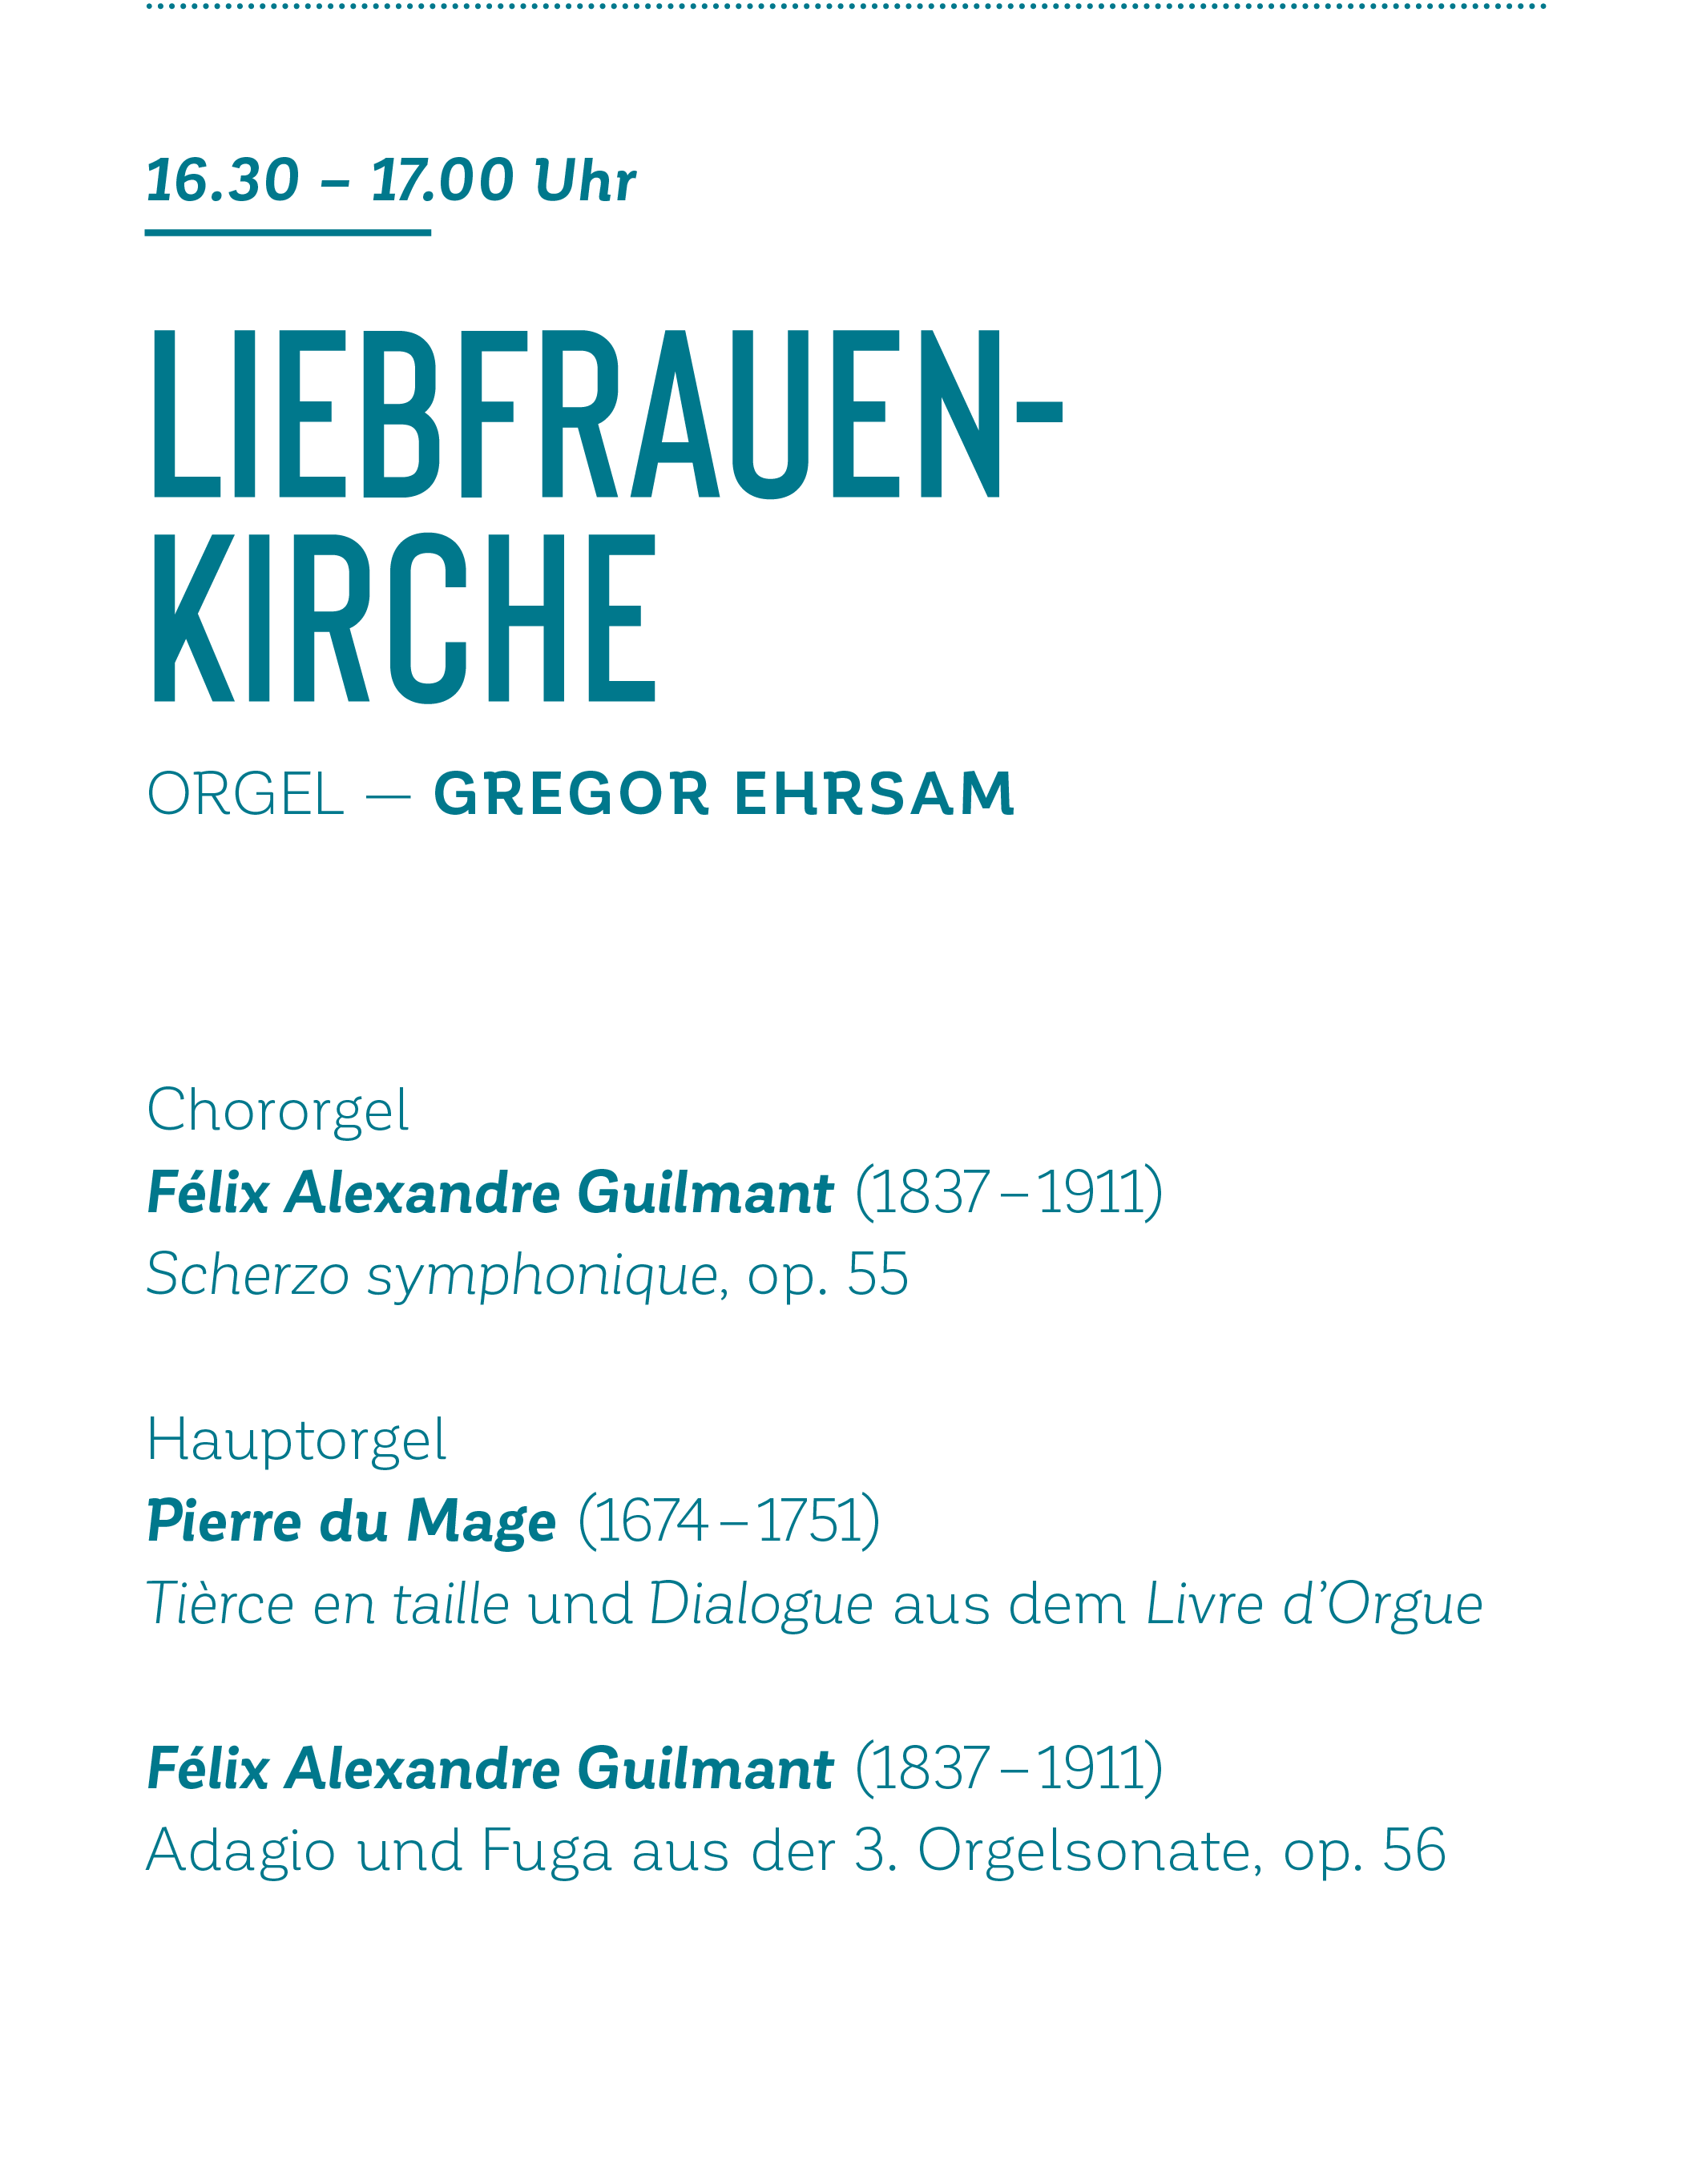 Zürcher Orgelspaziergang 2019 – Programm Liebfrauenkirche